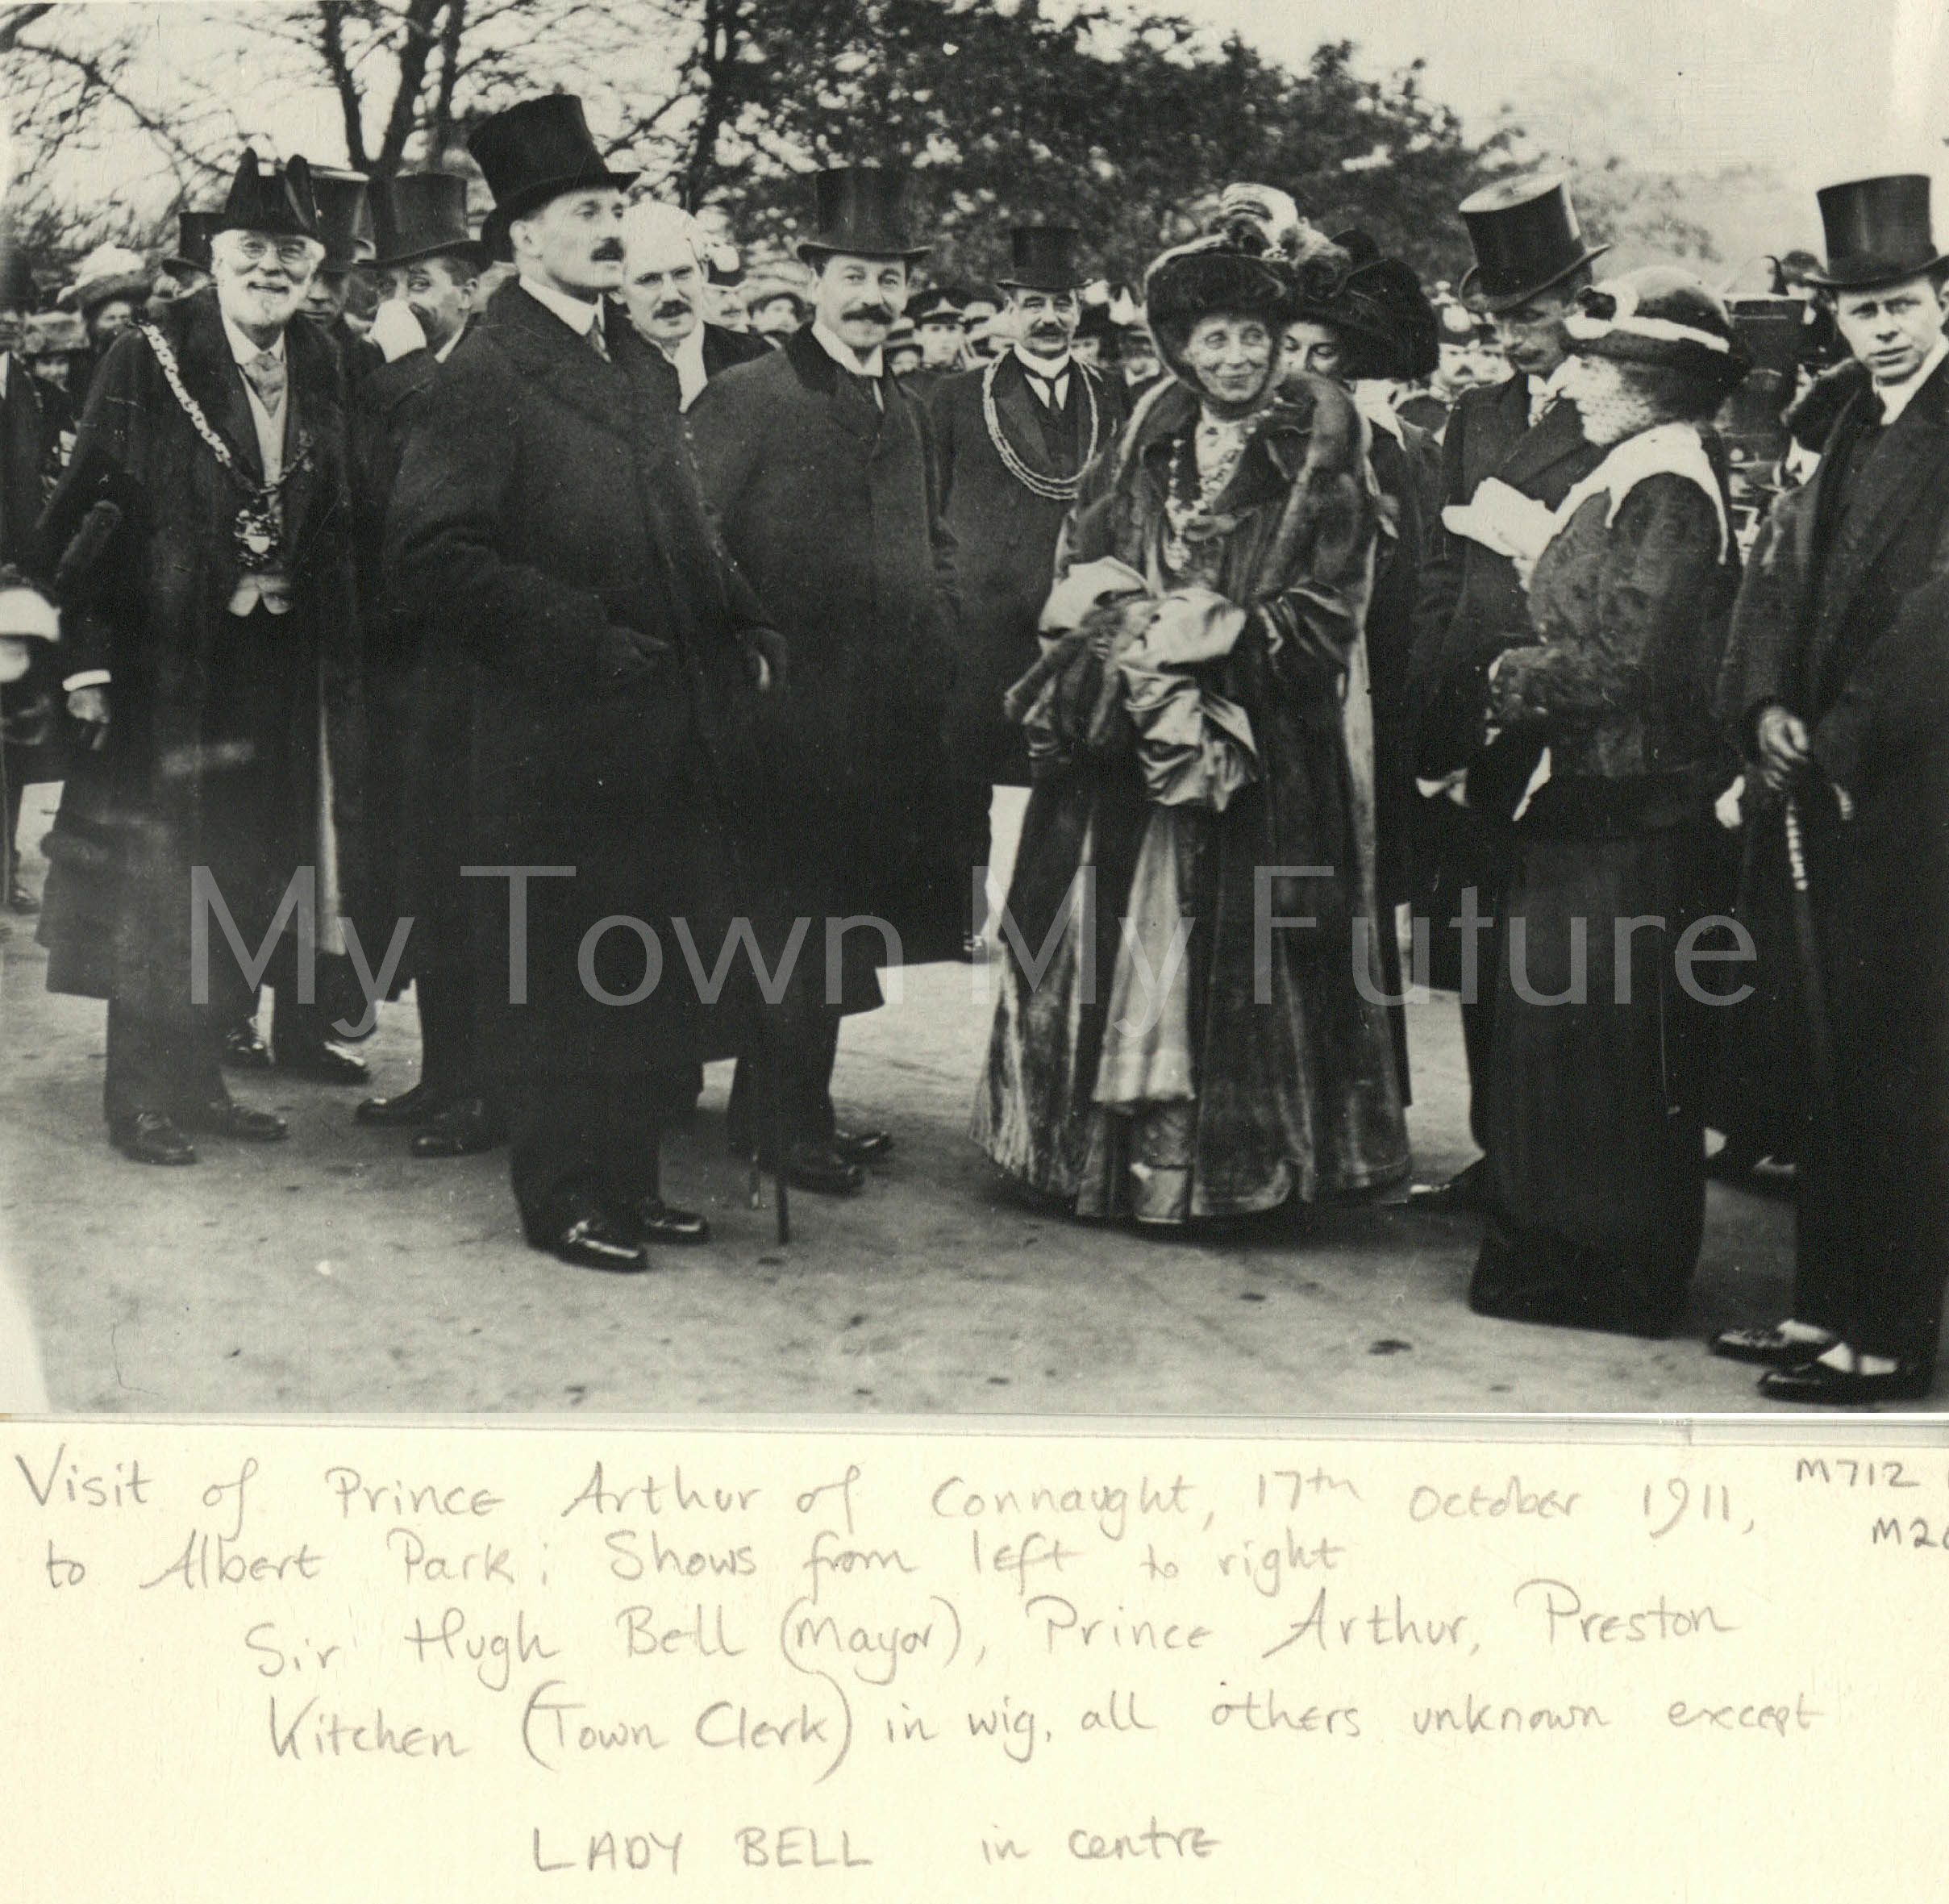 Albert Park - Showing Hugh Bell - Prince Arthur Preston Kitchen, 17th October 1911 - Date of the Opening of the Transporter Bridge - Dennis Wompra 